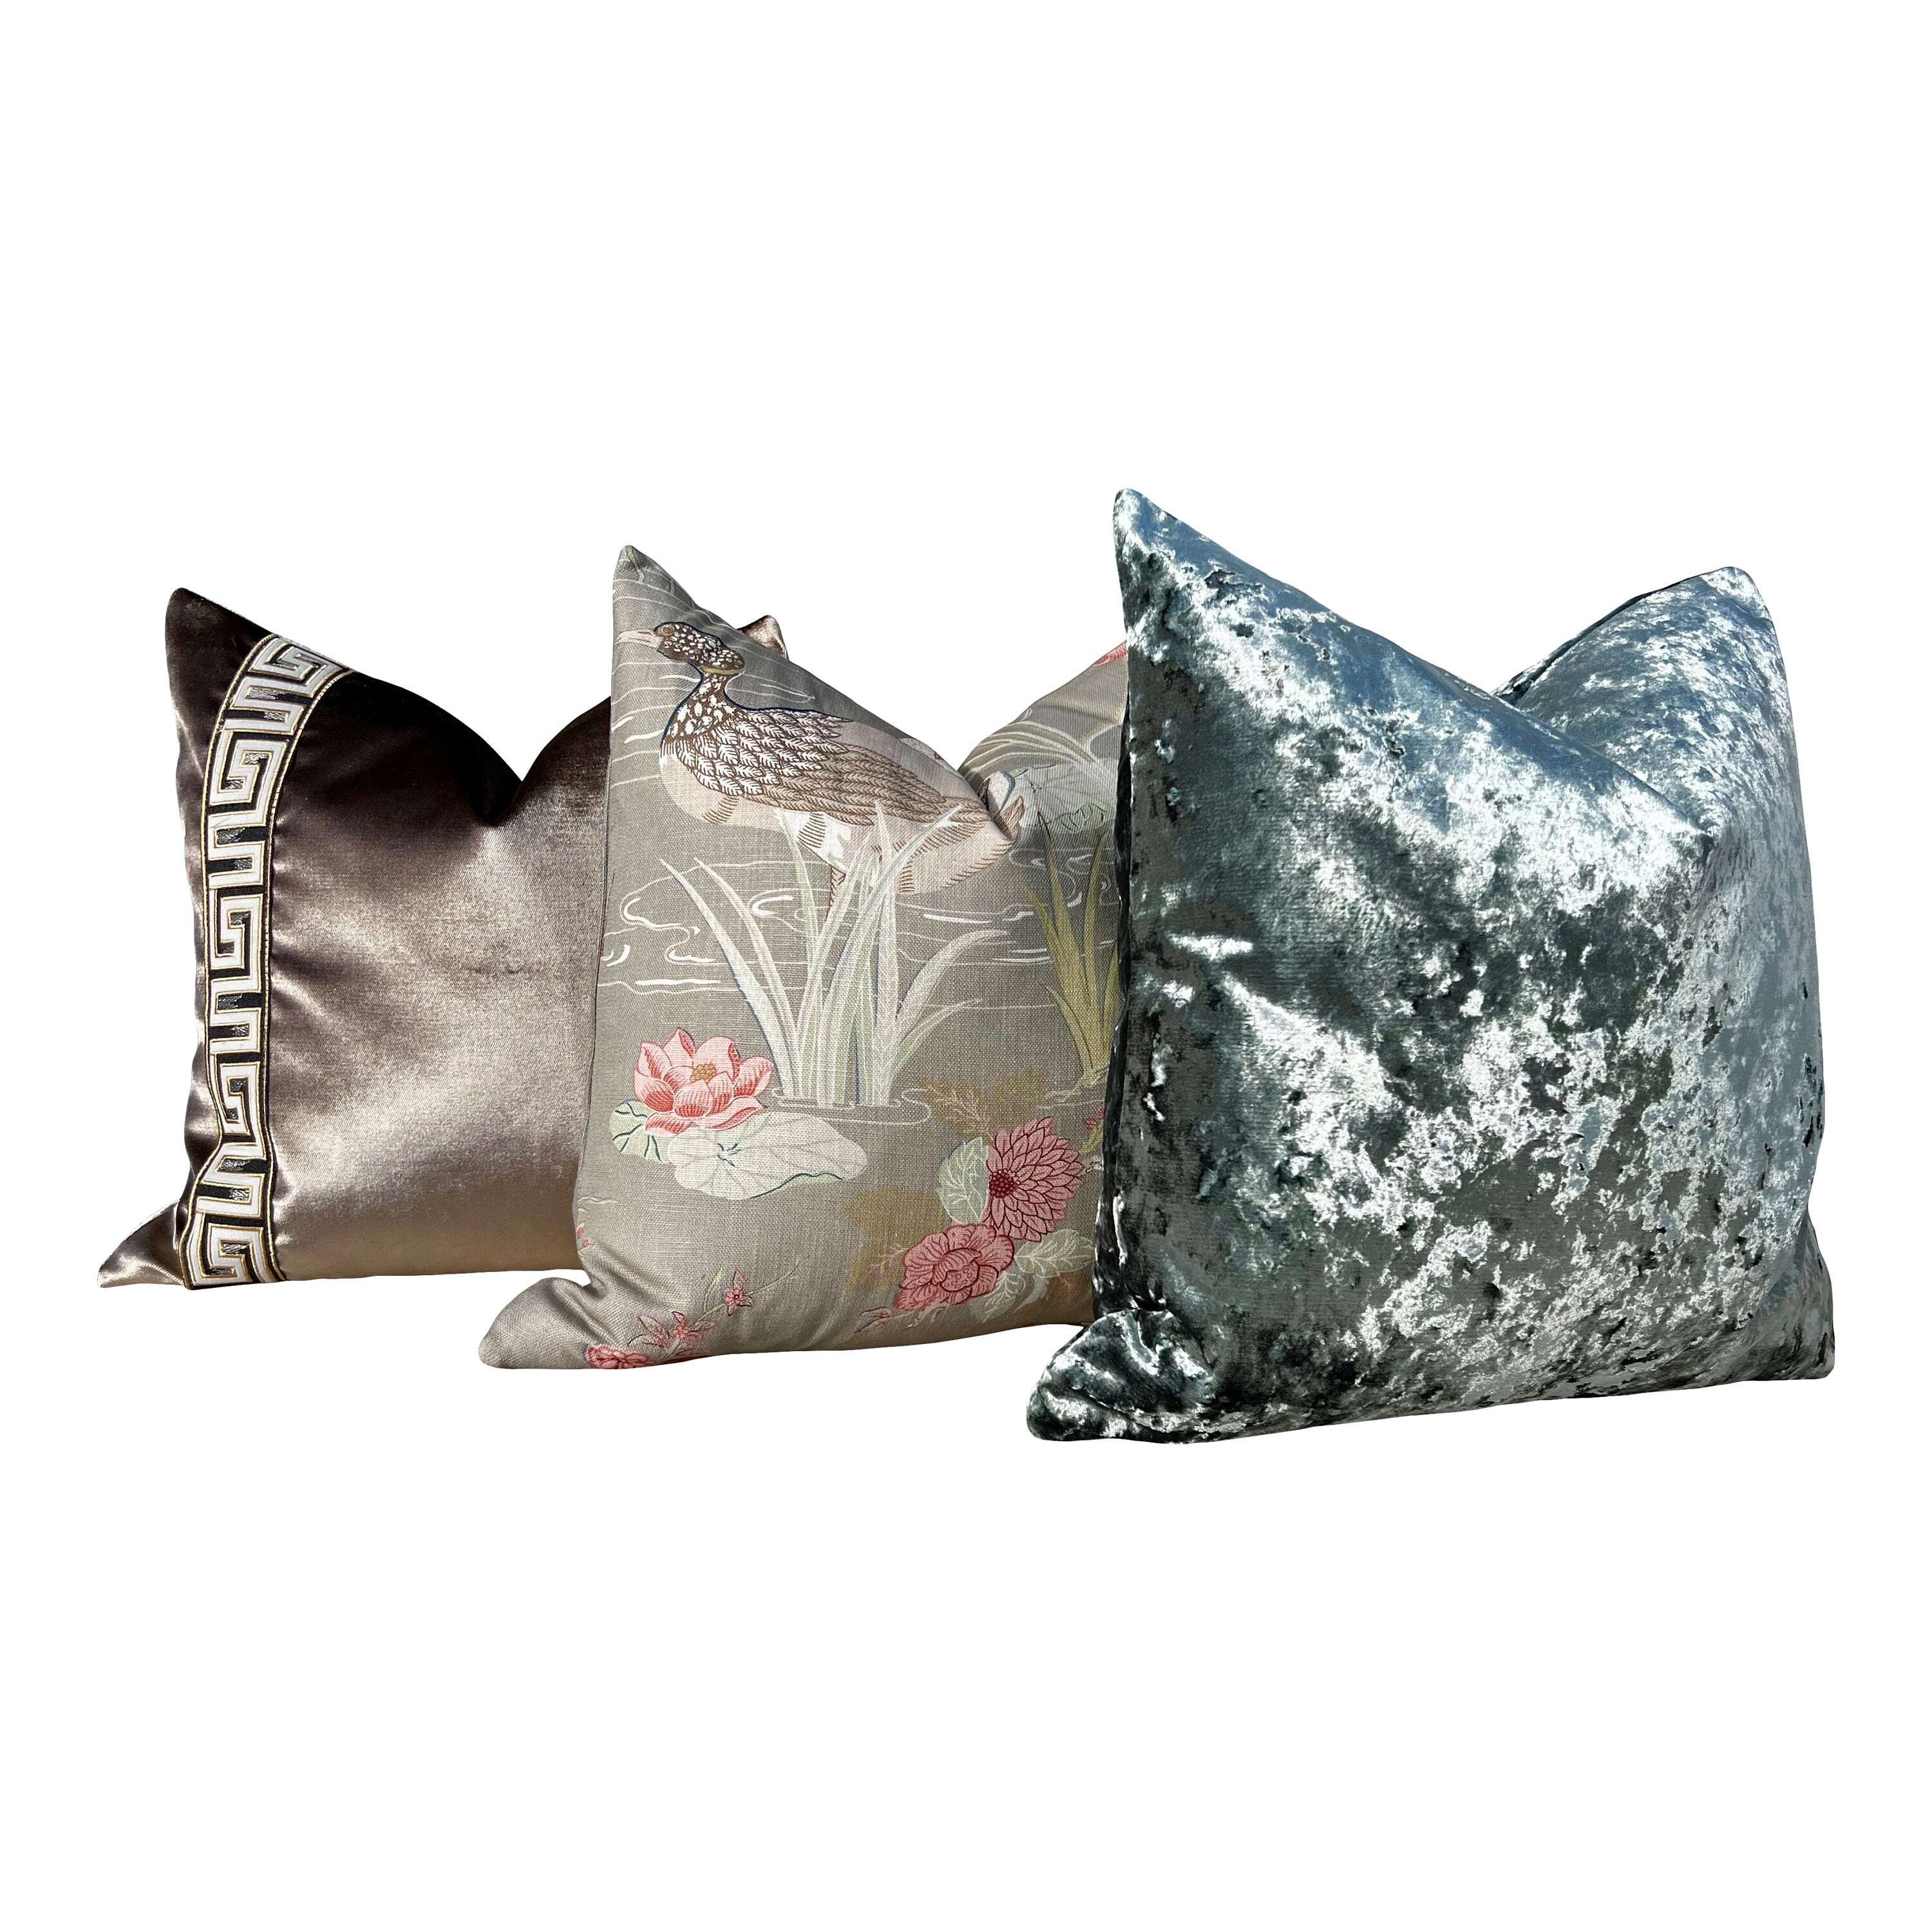 Lee Jofa Luzon Pillow in Fawn. Linen Taupe Pillow Designer Exotic Bird Pillows, Luxury Botanical Pillow, euro Sham Linen Cover 26x26 Coral